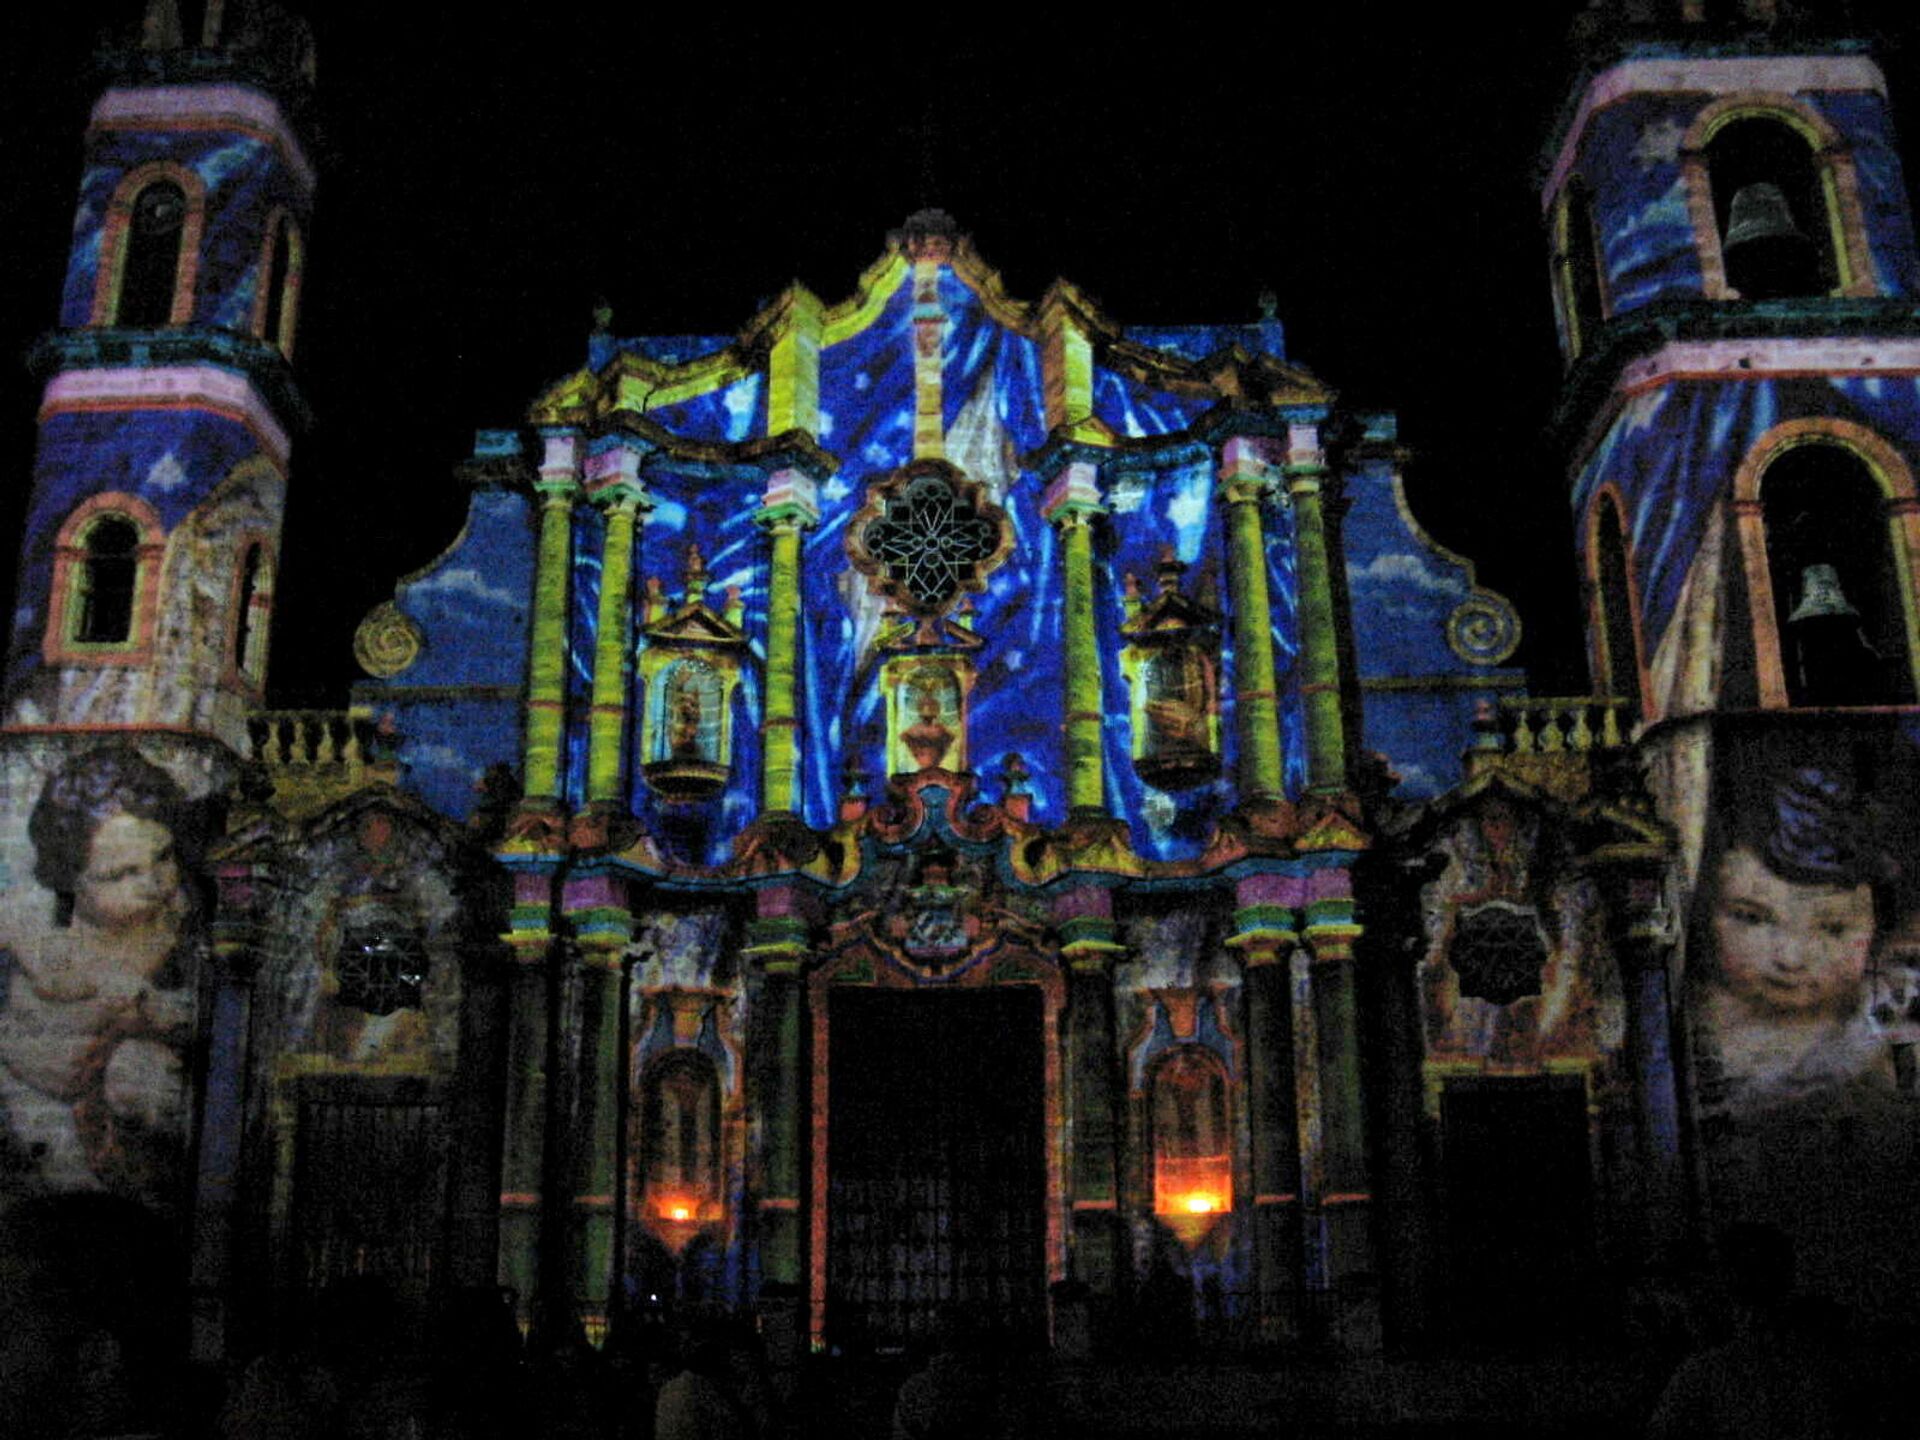 Catedral de La Habana iluminada, marzo de 2012, obra del artista italo-francés Gaspare Di Caro - Sputnik Mundo, 1920, 22.02.2021